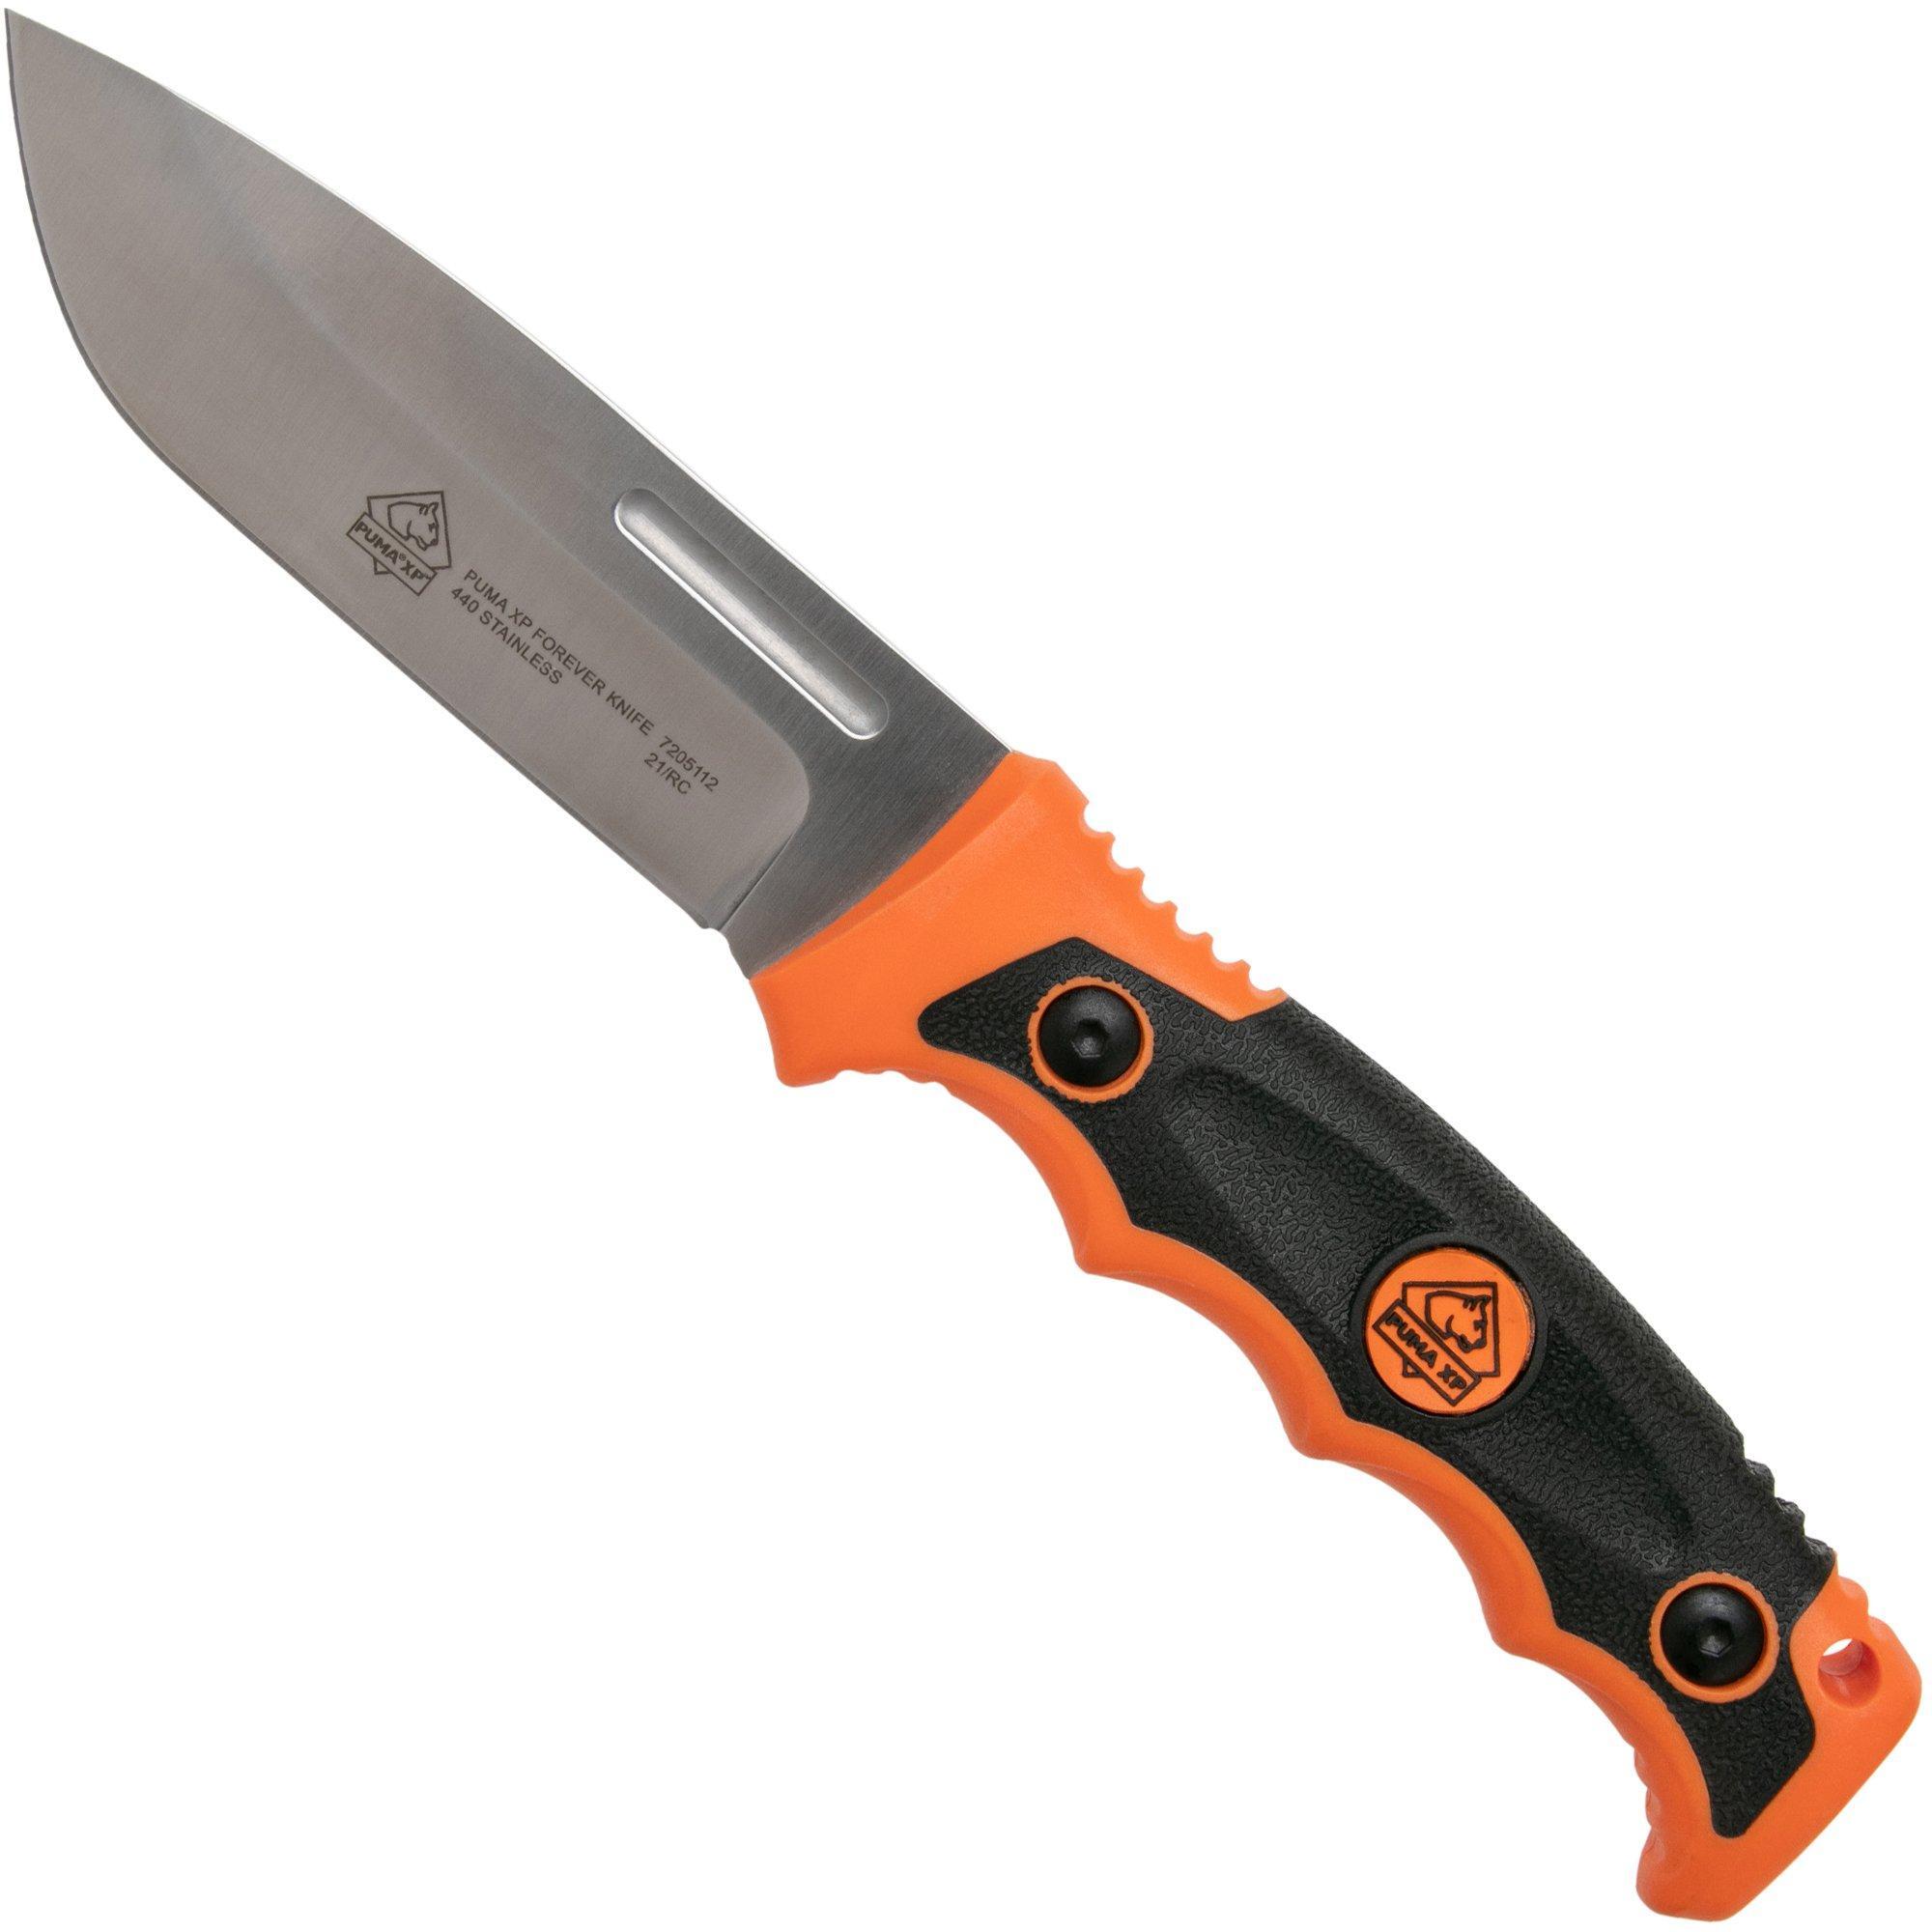 PUMA PUMA XP Forever Knife, Orange 7205112 vaststaand mes